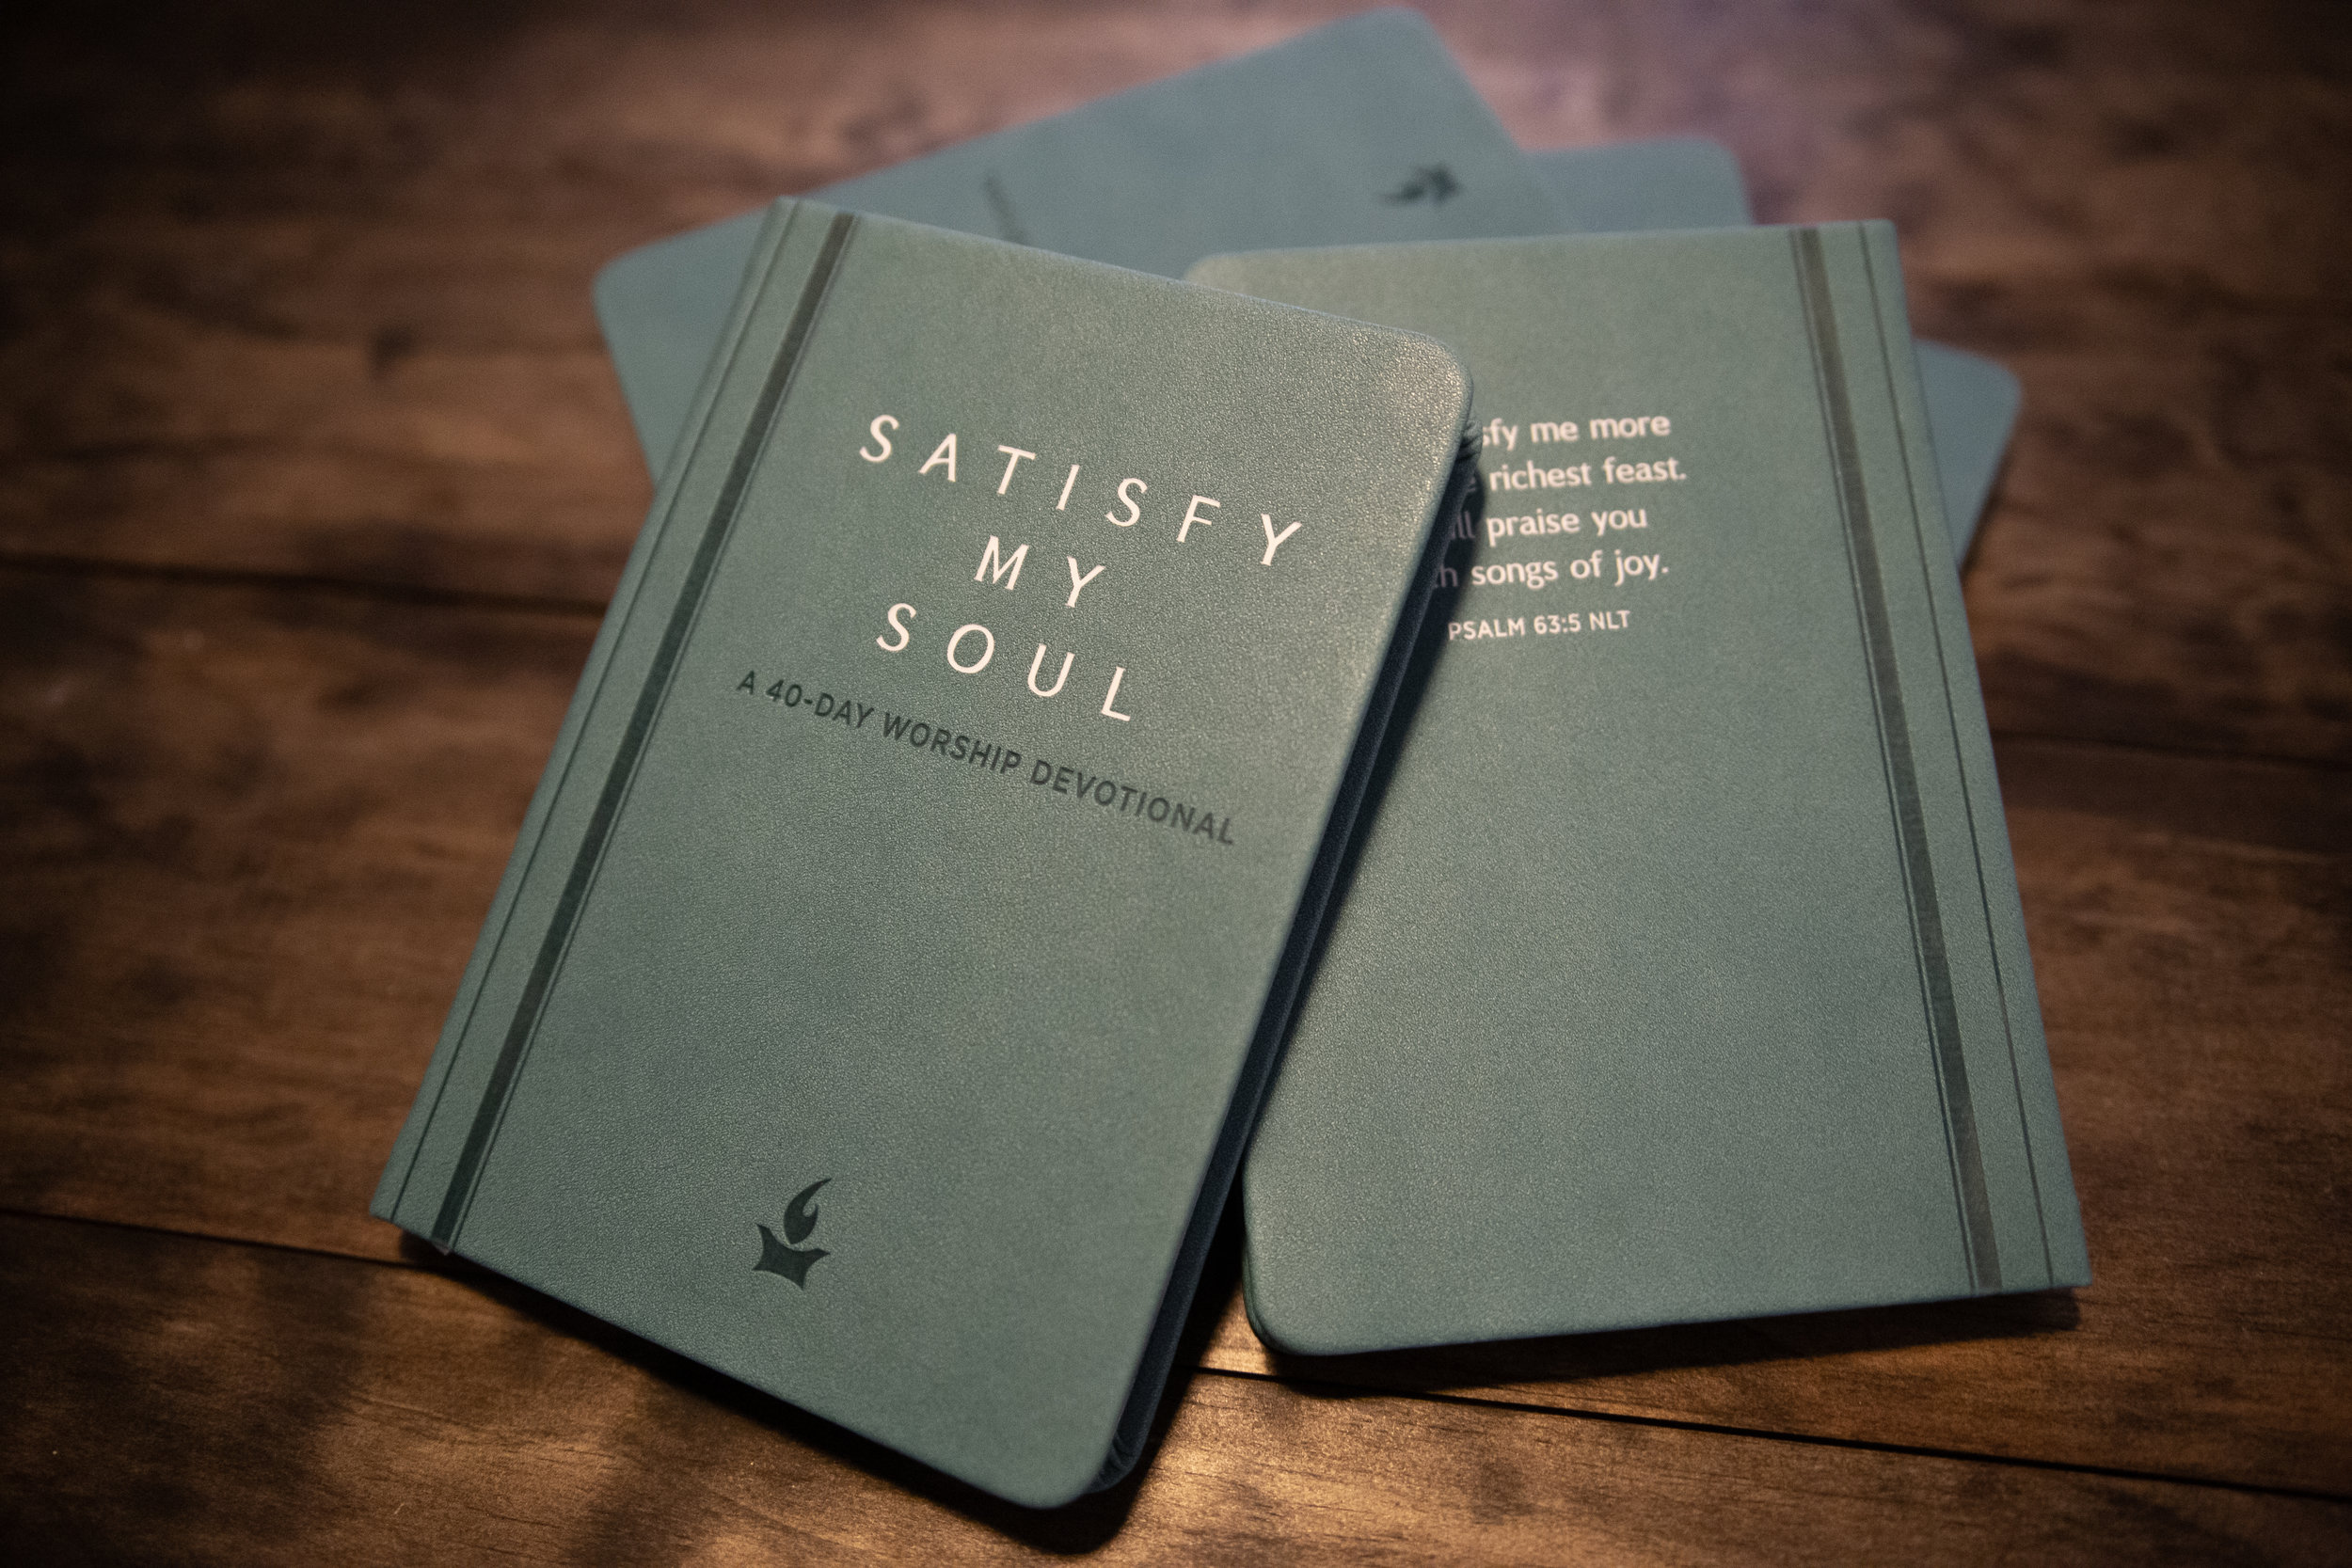 Satisfy My Soul - Product Shoot - 1.1.18-45.jpg